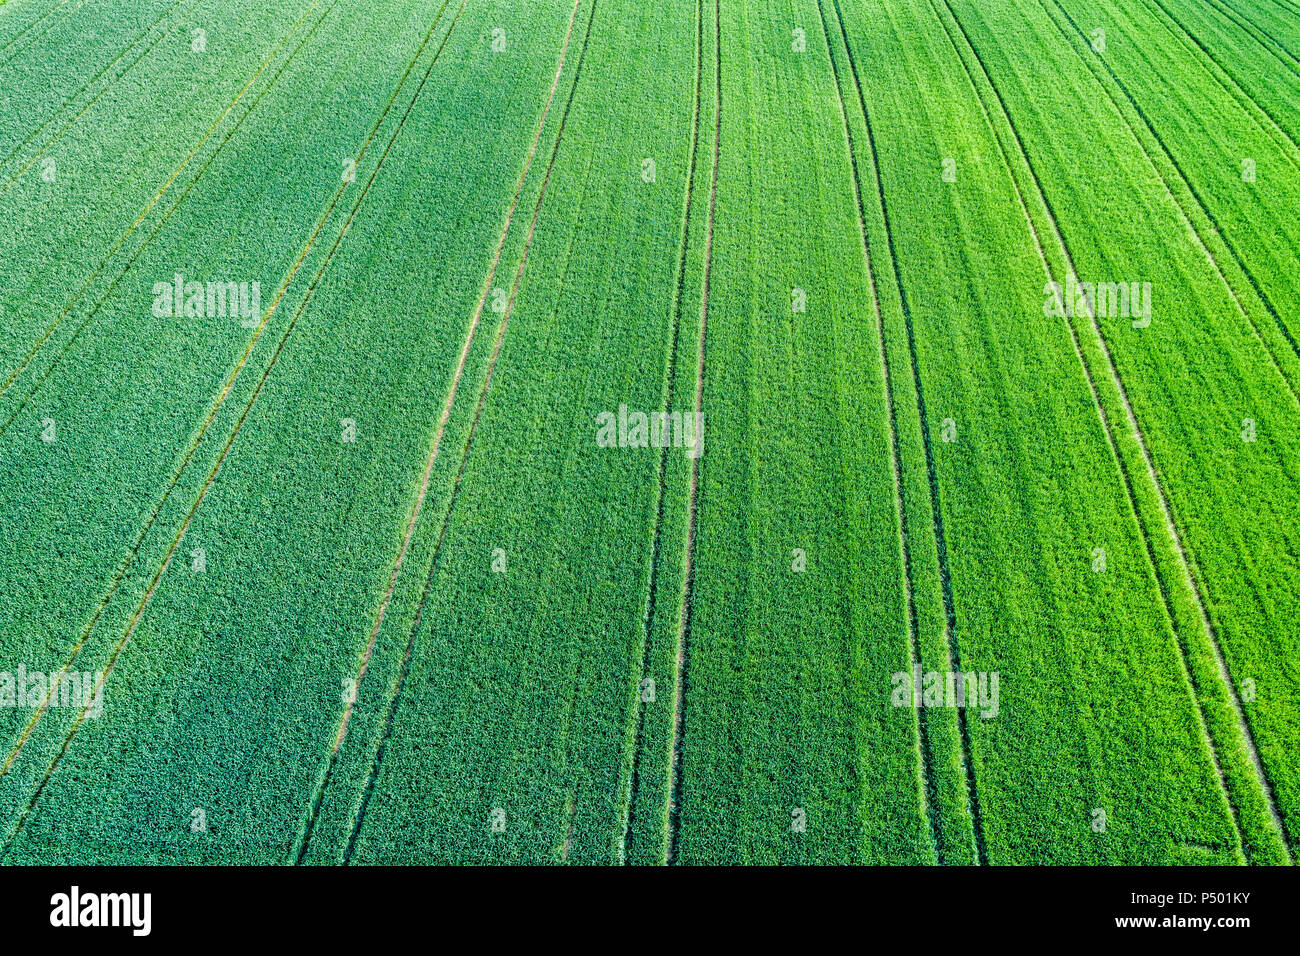 Allemagne, Bade-Wurtemberg, Rems-Murr-Kreis, vue aérienne du domaine vert Banque D'Images